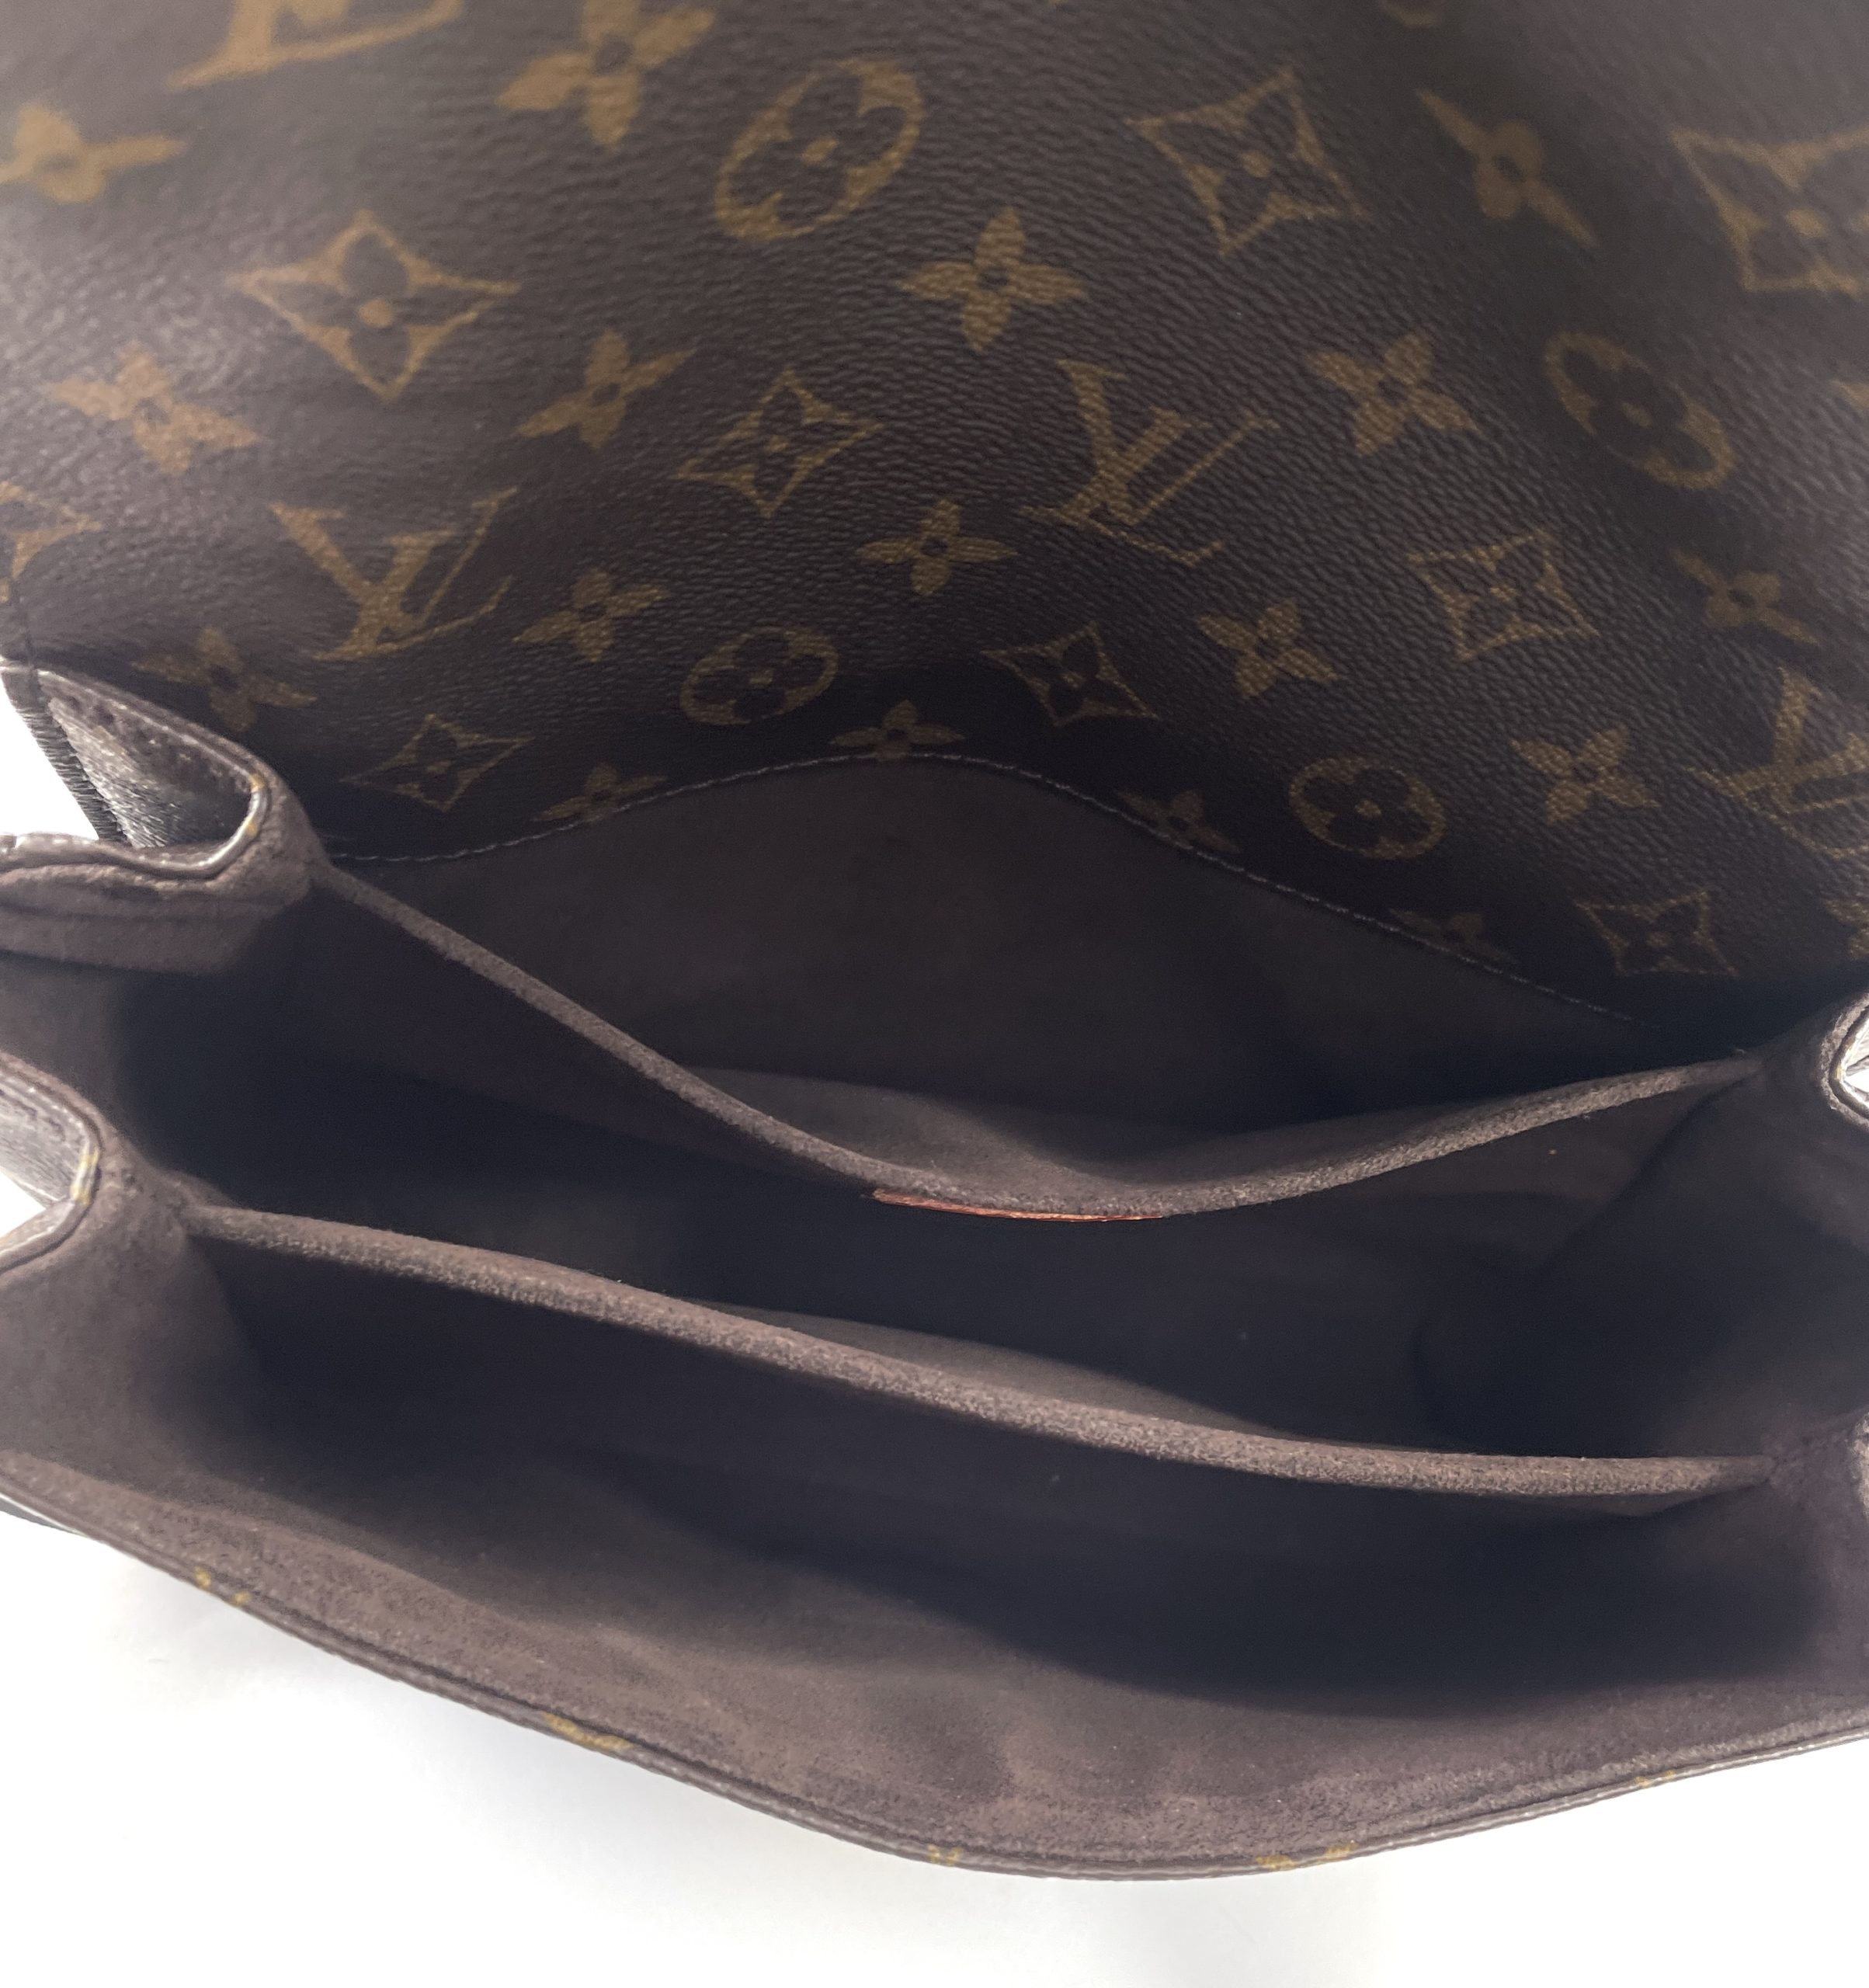 Louis Vuitton 22 Pochette Metis reverse monogram